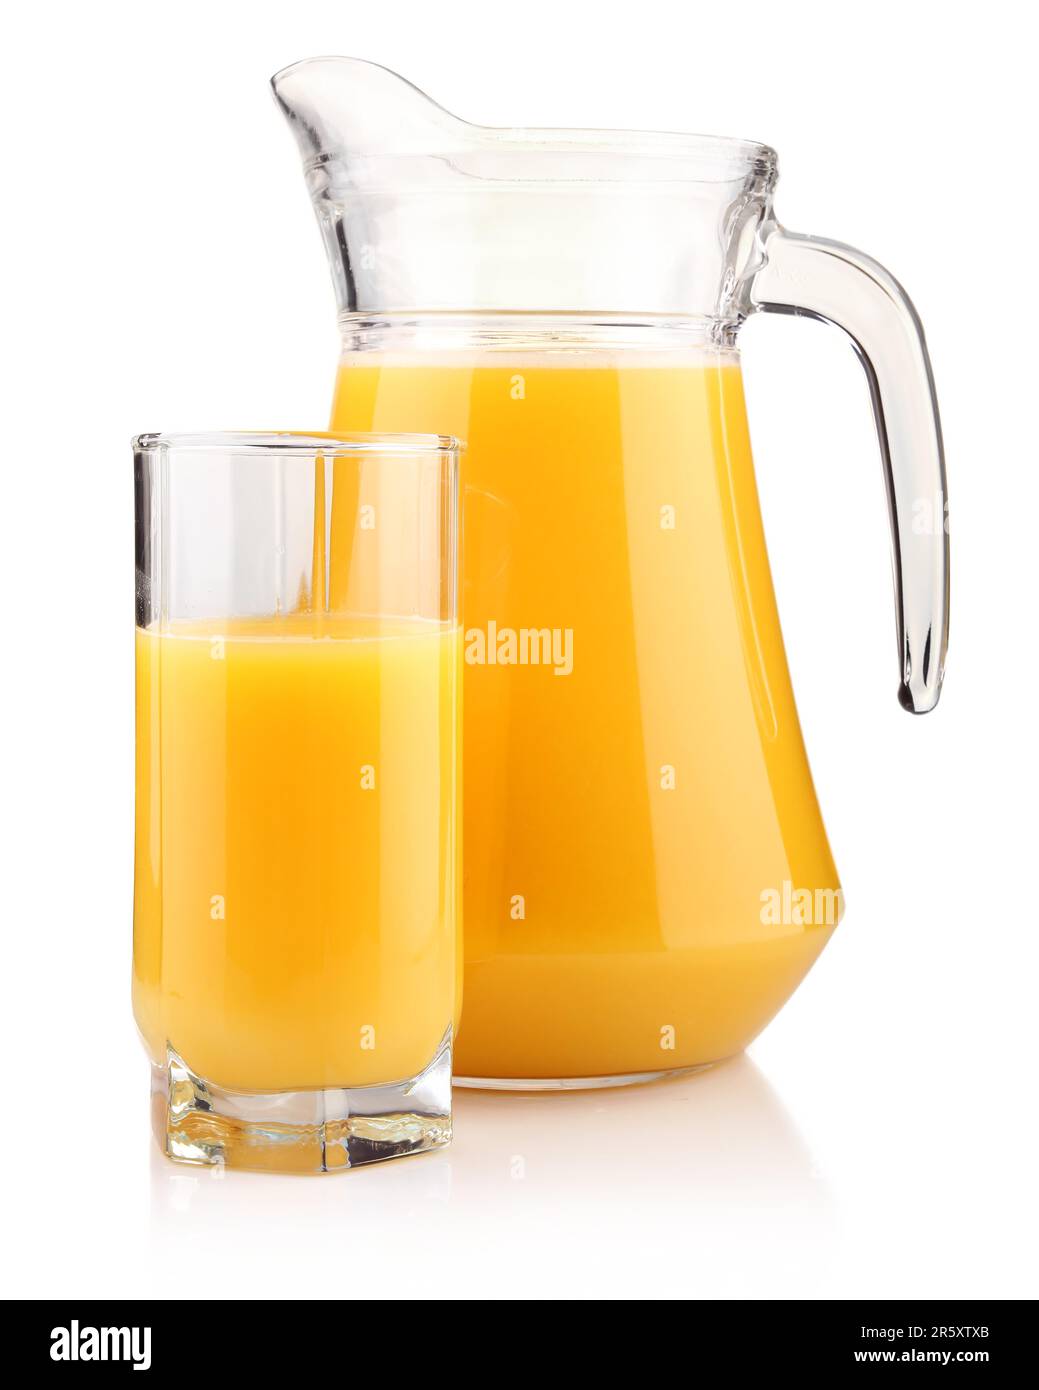 https://c8.alamy.com/comp/2R5XTXB/jug-and-glass-of-orange-juice-isolated-on-white-background-2R5XTXB.jpg